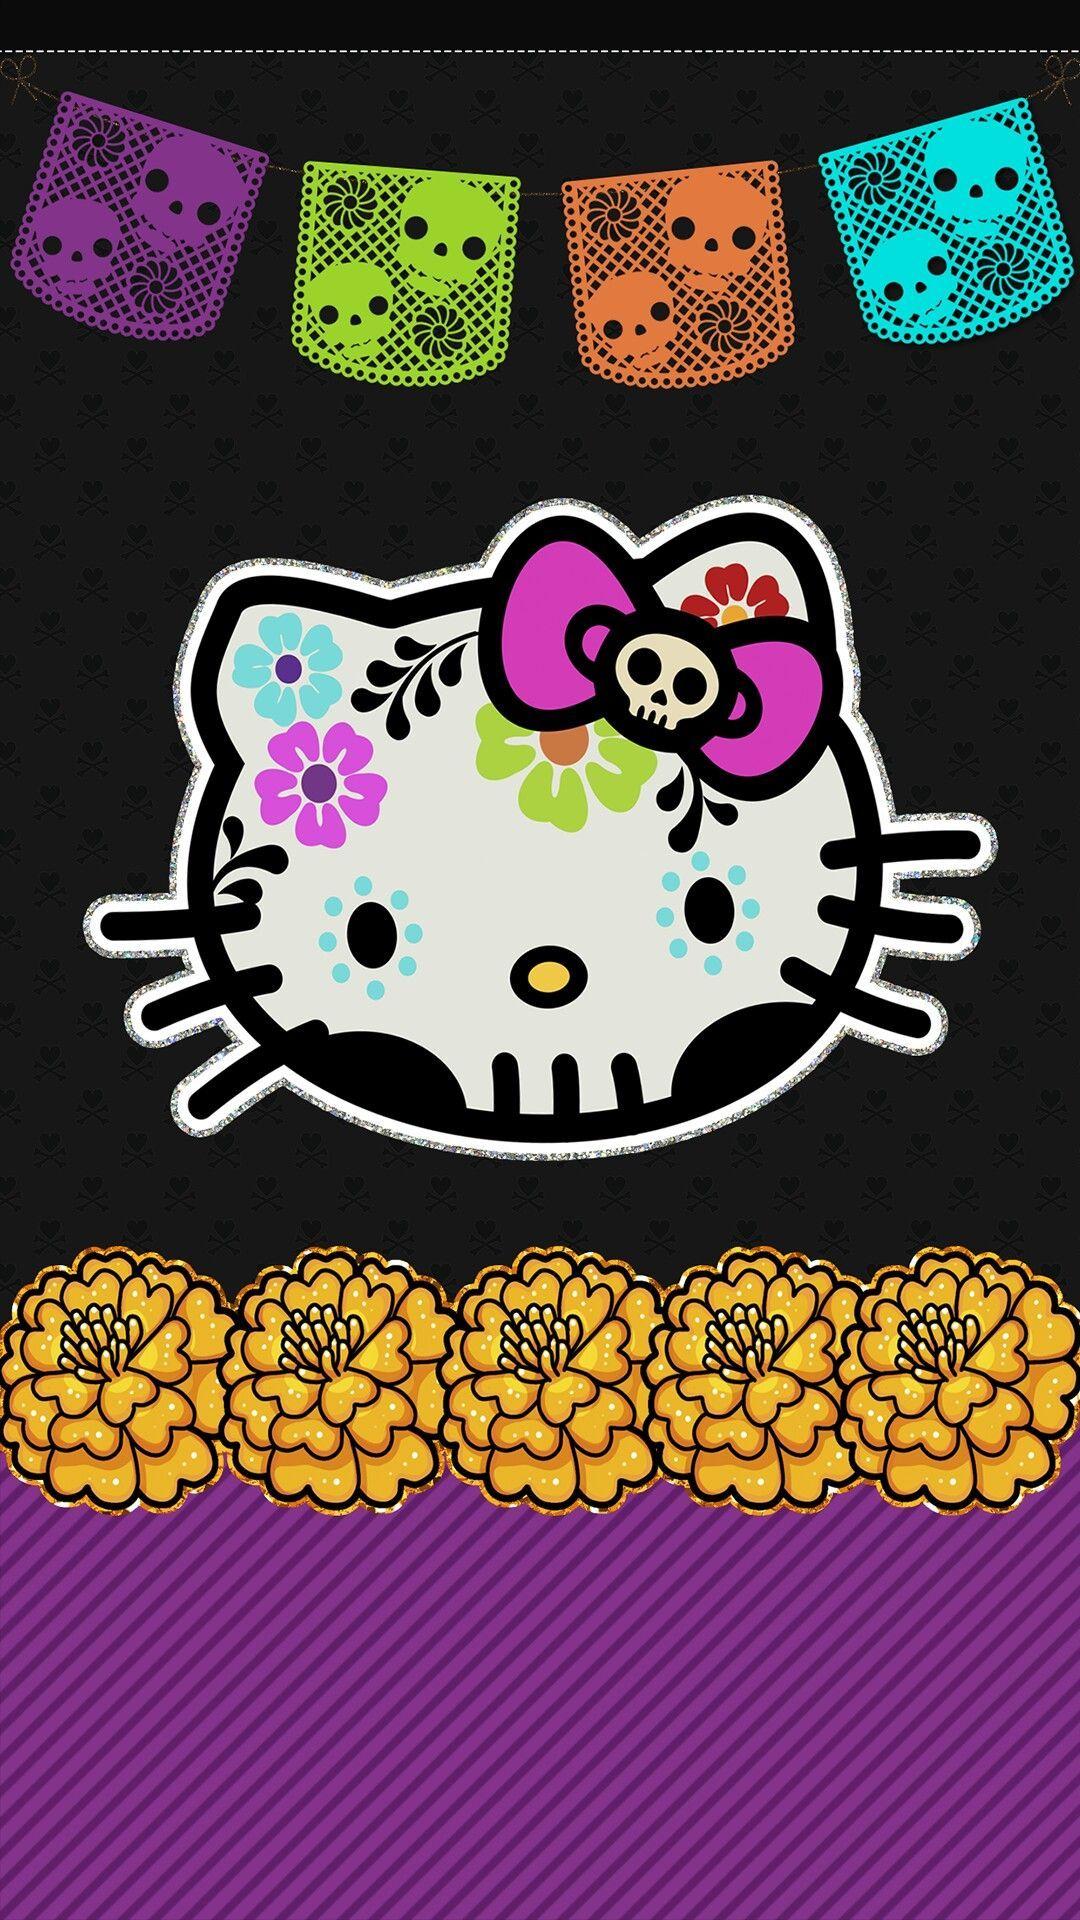 Hello Kitty cell phone wallpaper, lock screen pic, dia de los